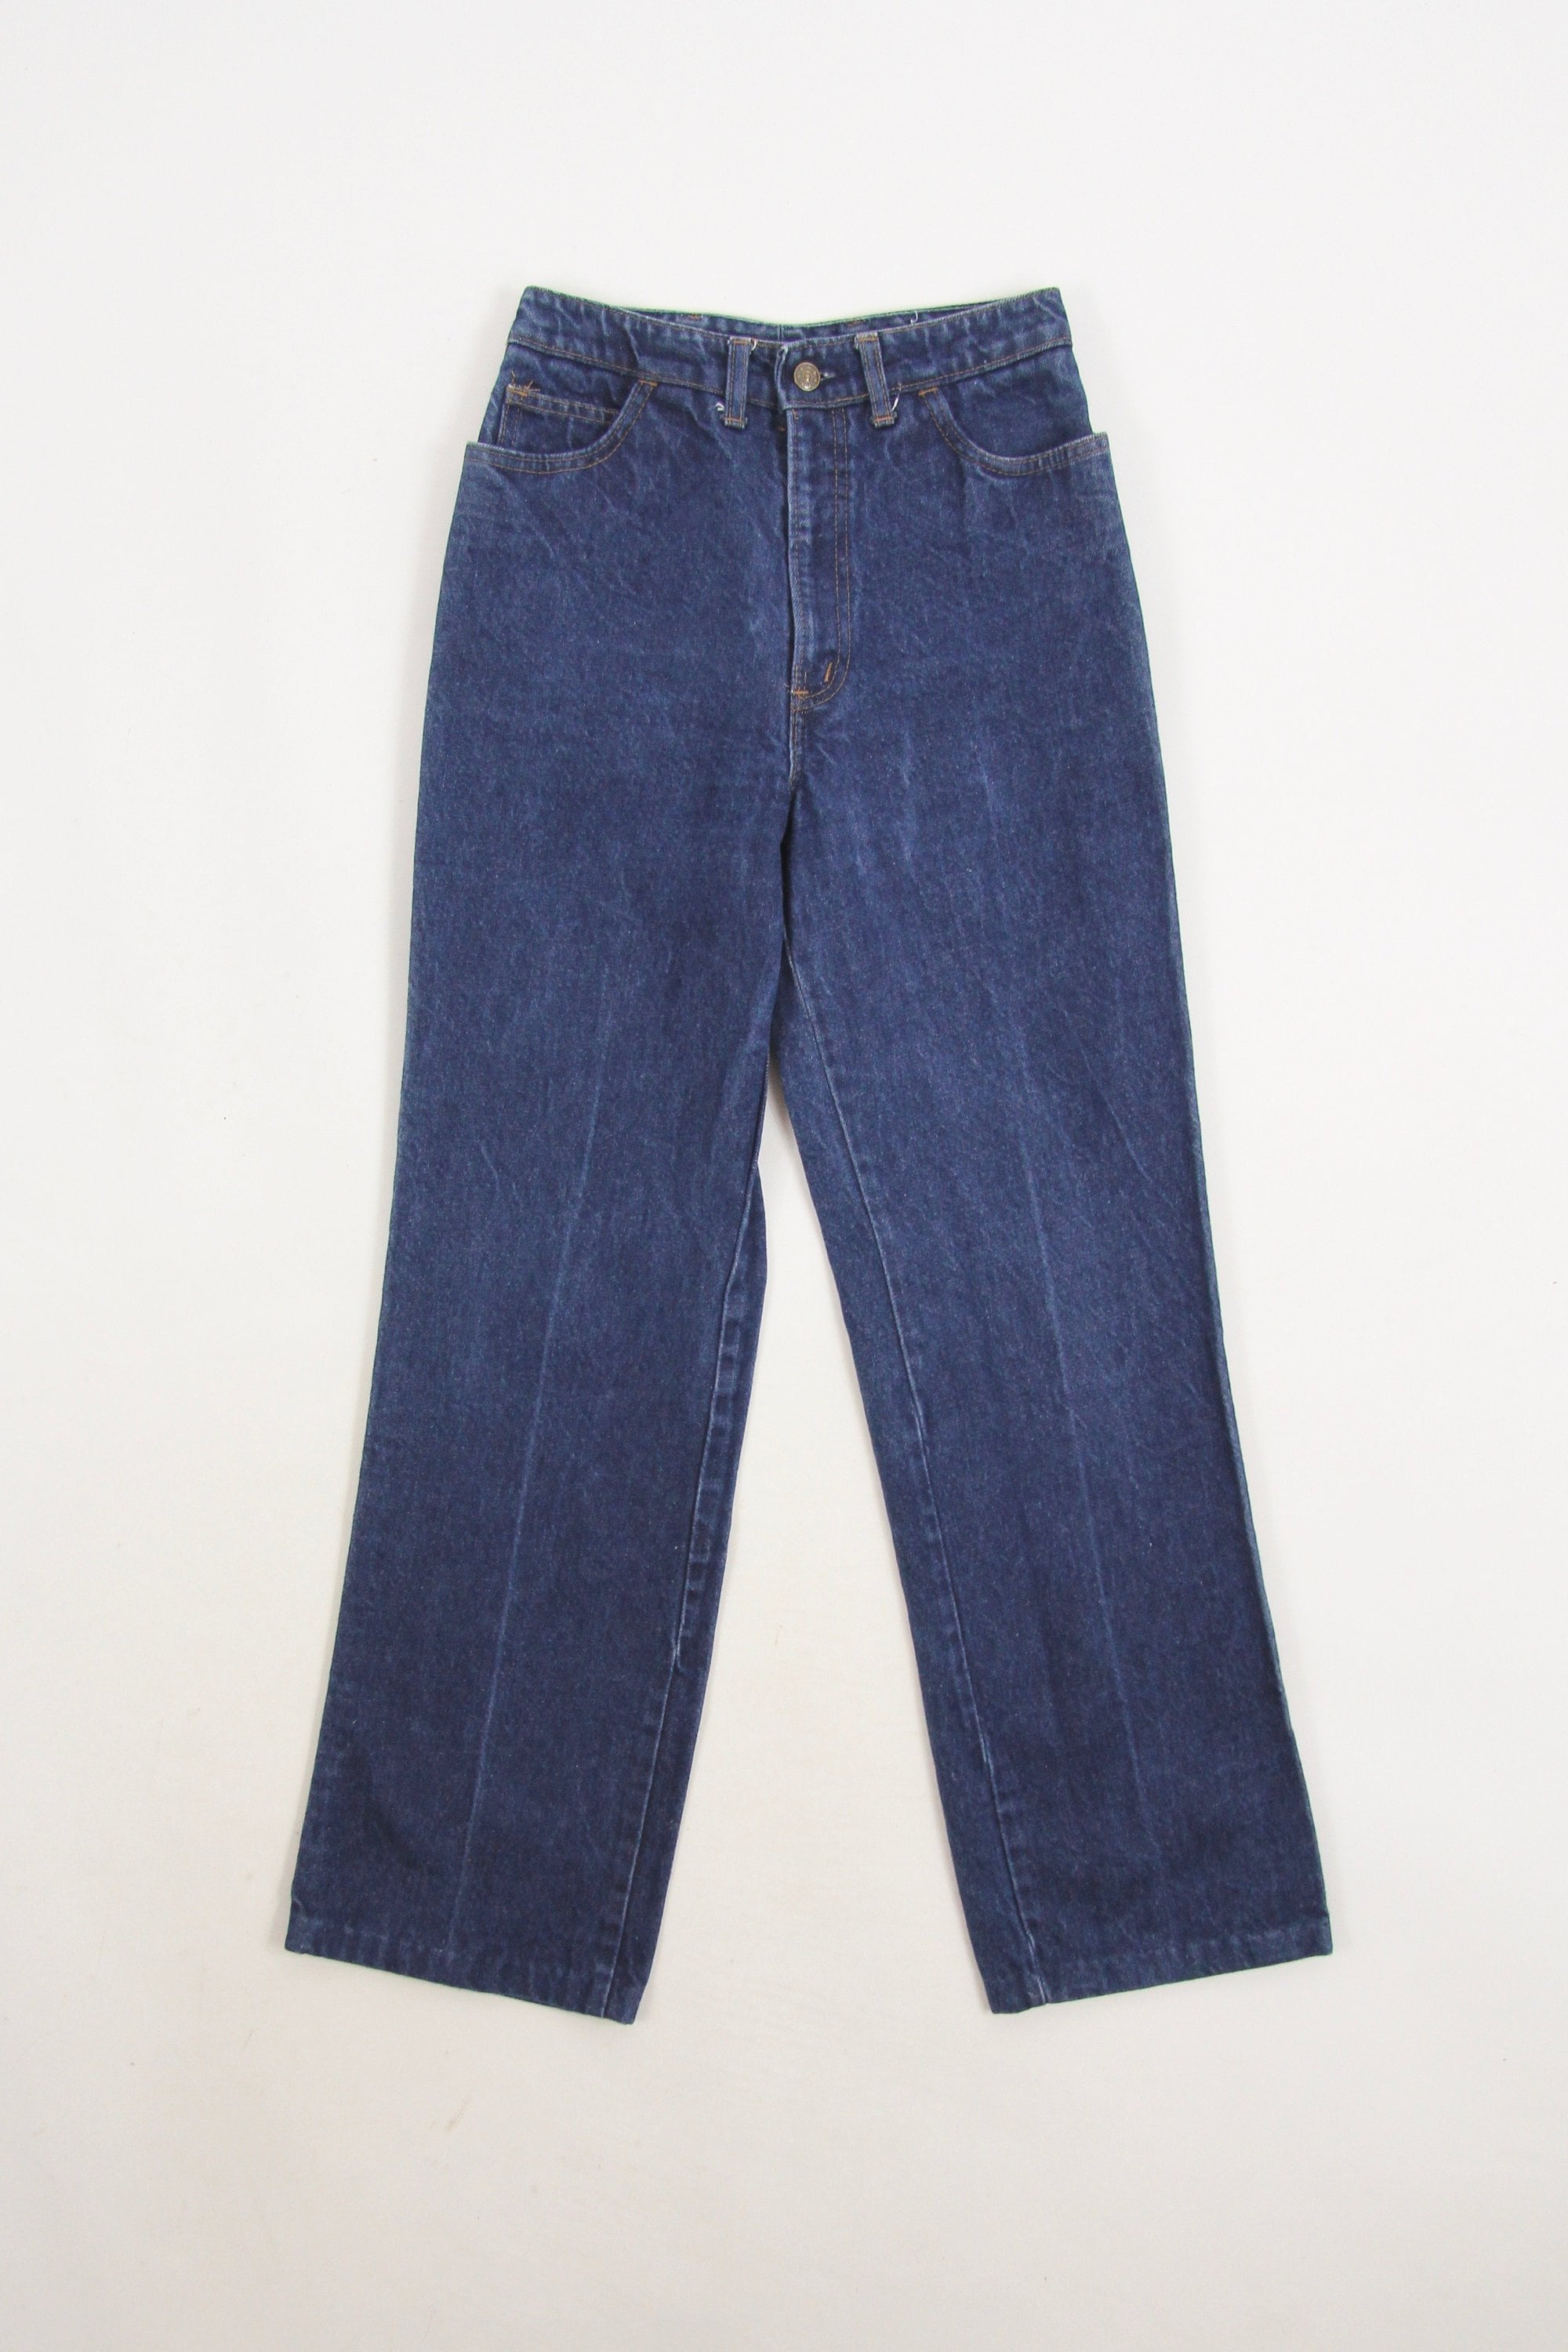 70's Women's Jeans Vintage High Waisted Dark Wash Body Lingo Denim ...